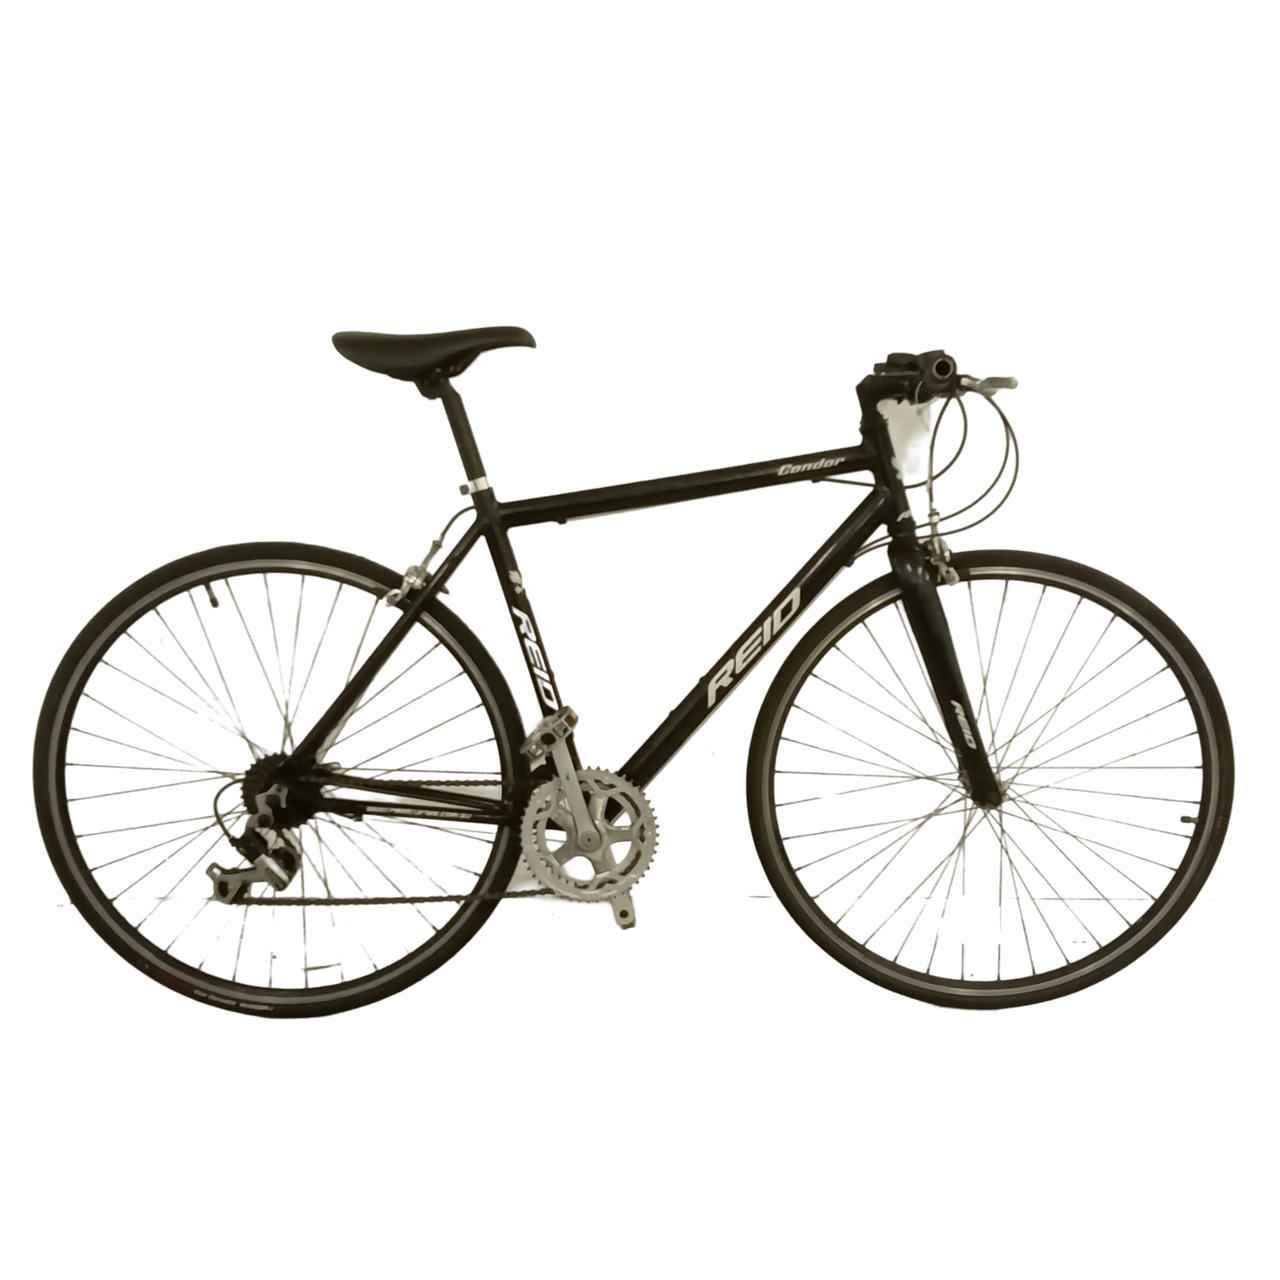 1742 - 52cm Black, Flat Bar Commuter, Bike